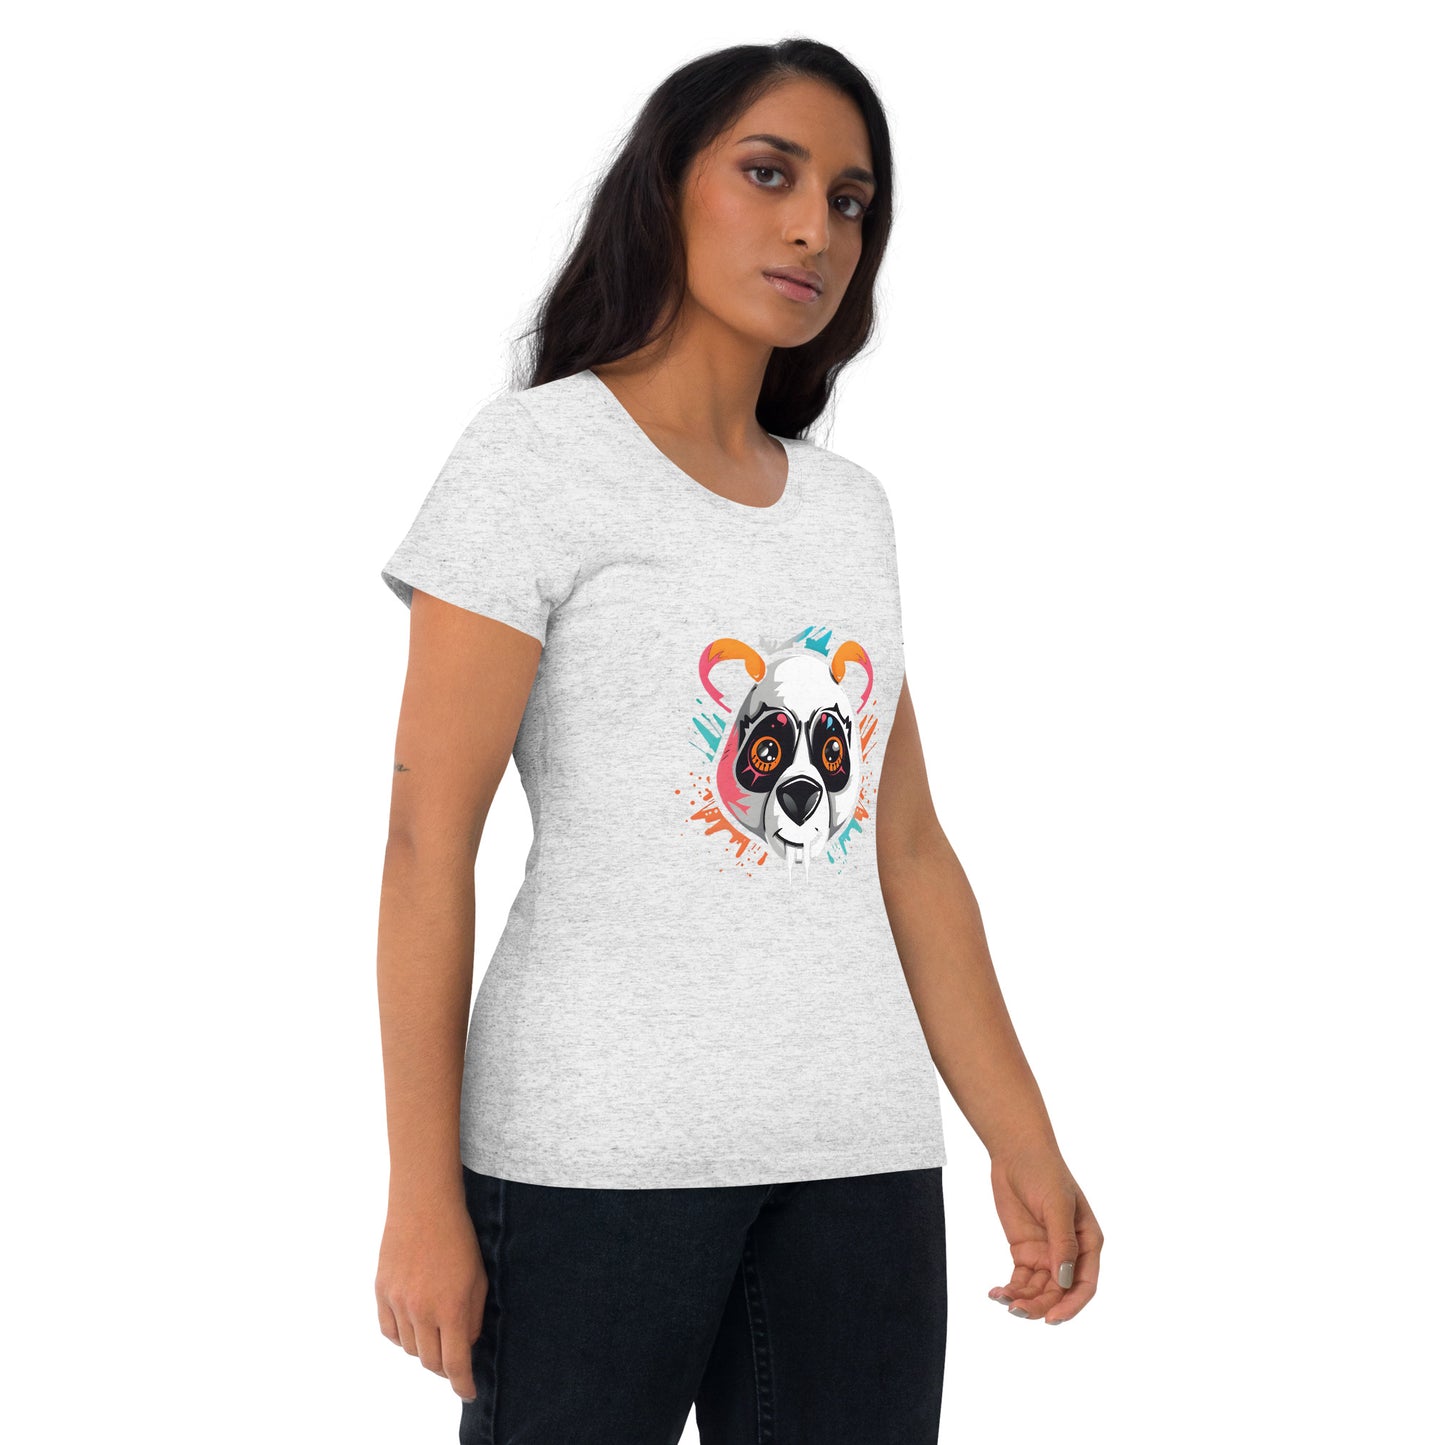 Pandamaniac Unisex Tri-Blend T-Shirt